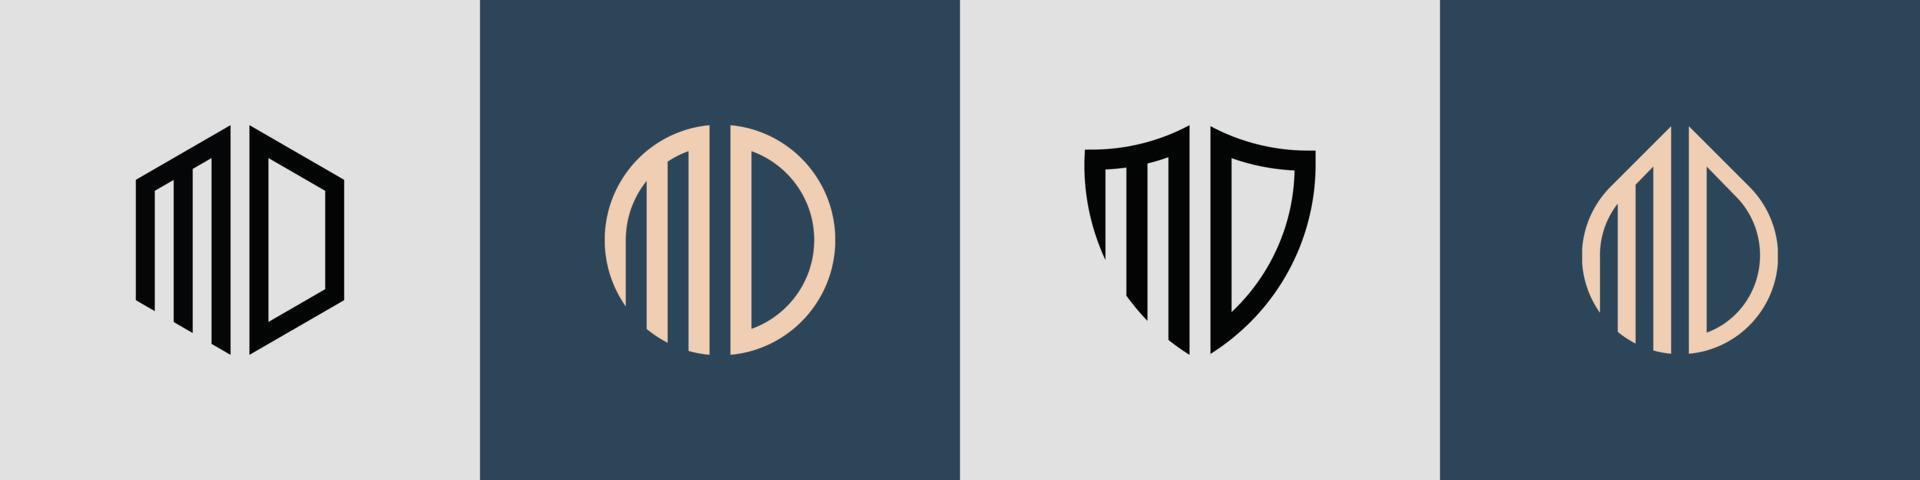 pacote de designs de logotipo md de letras iniciais simples criativas. vetor